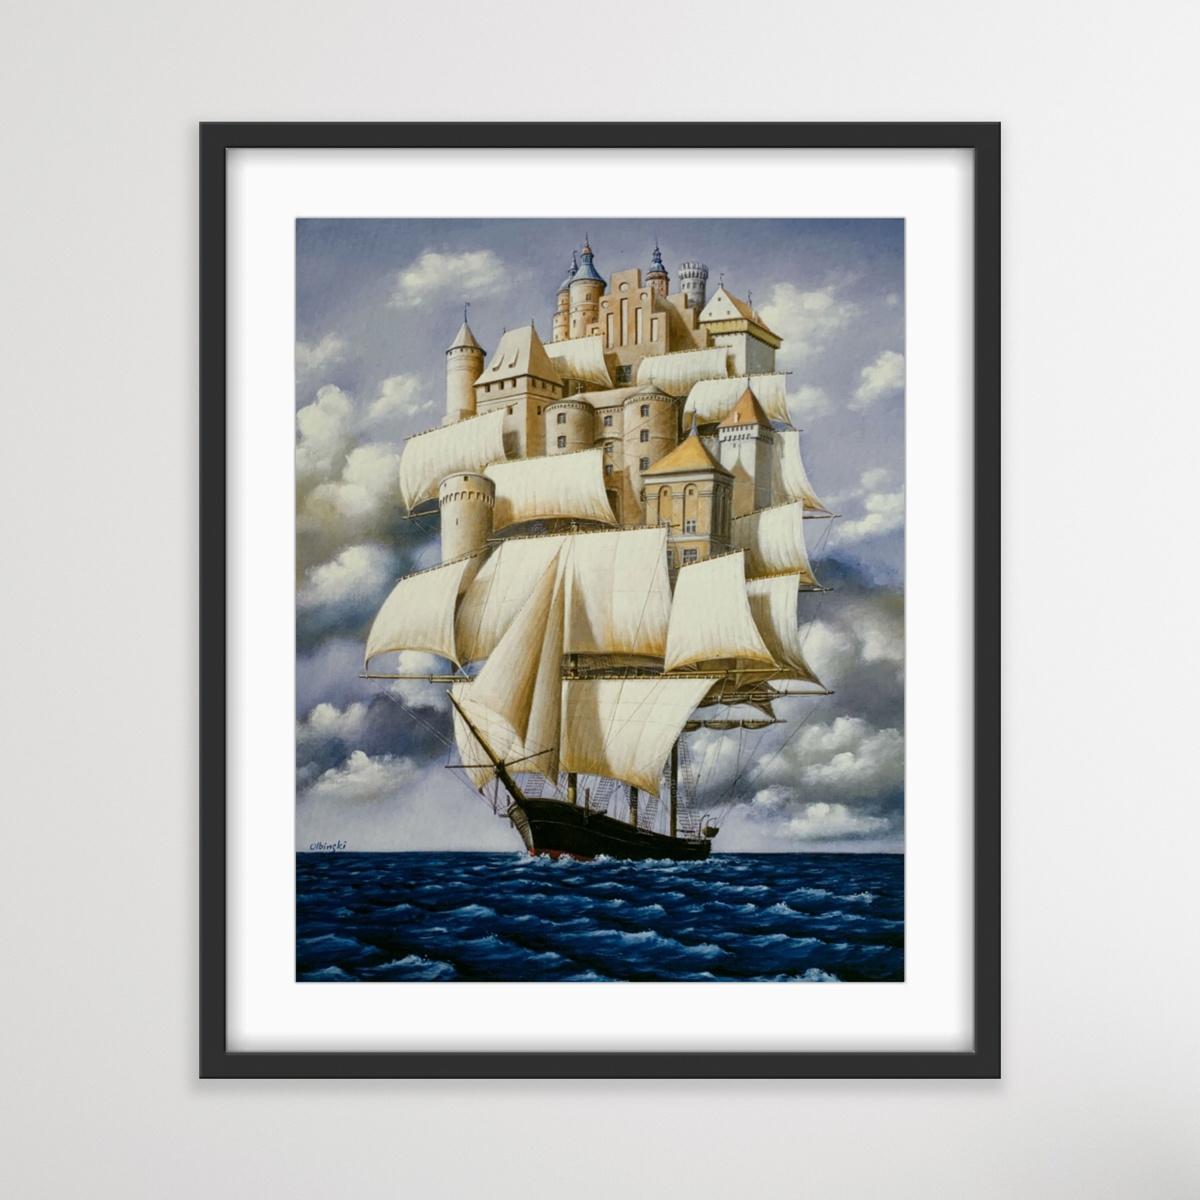 Childhood castles - Surrealist print, Limited edition, Established Polish artist - Print by Rafał Olbiński